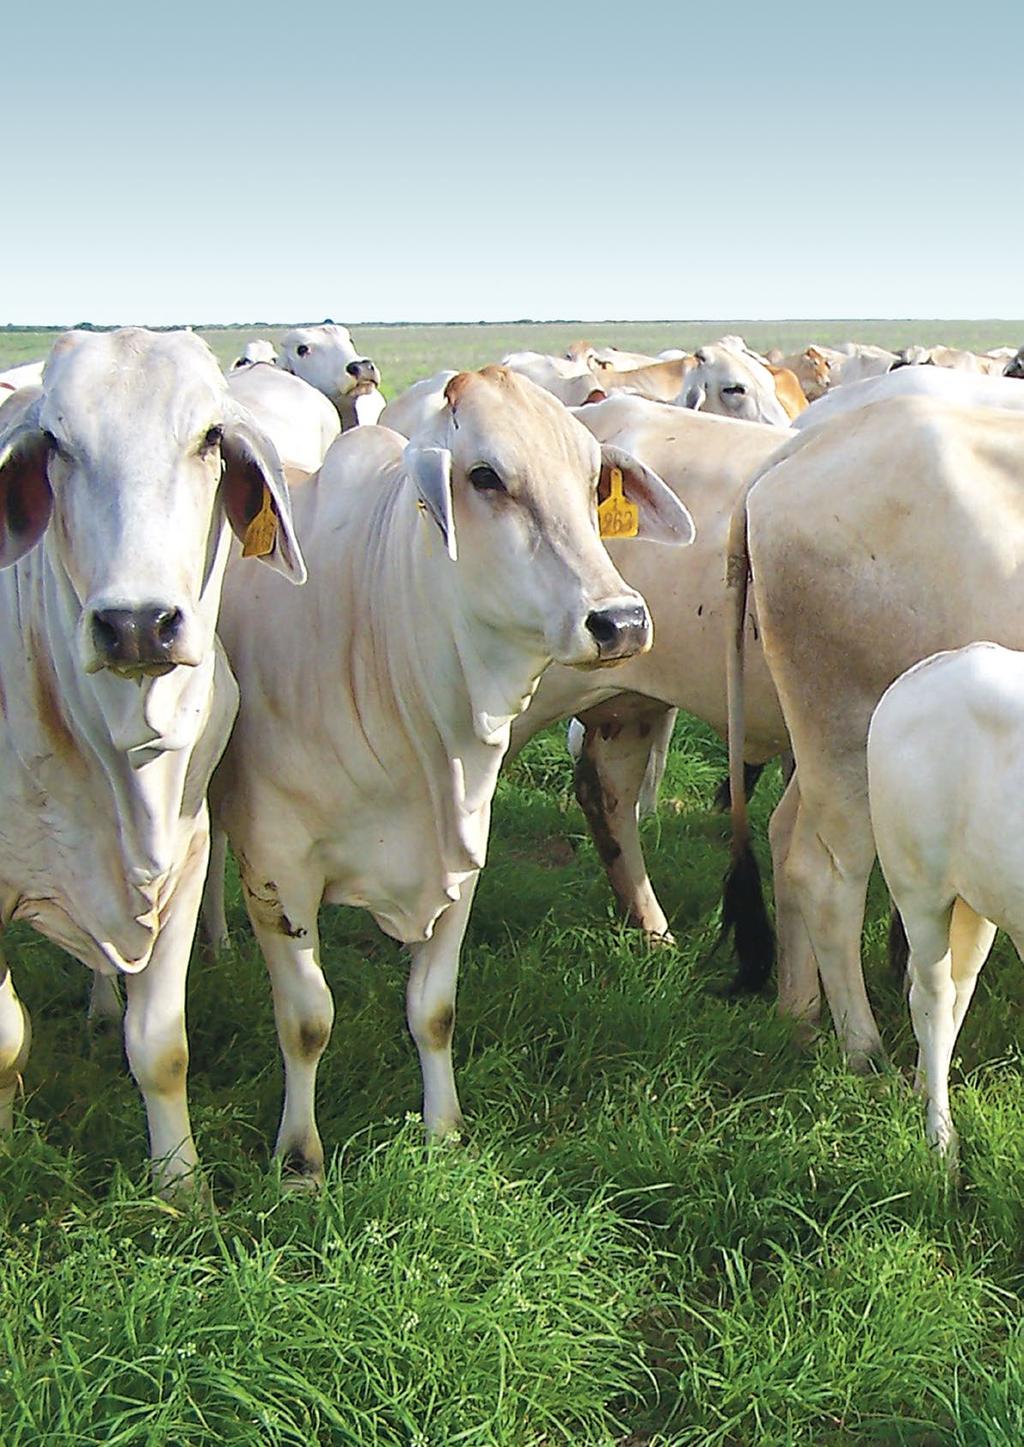 ANIMAL HEALTH PROGRAMS The Australian beef herd has an enviable health status.